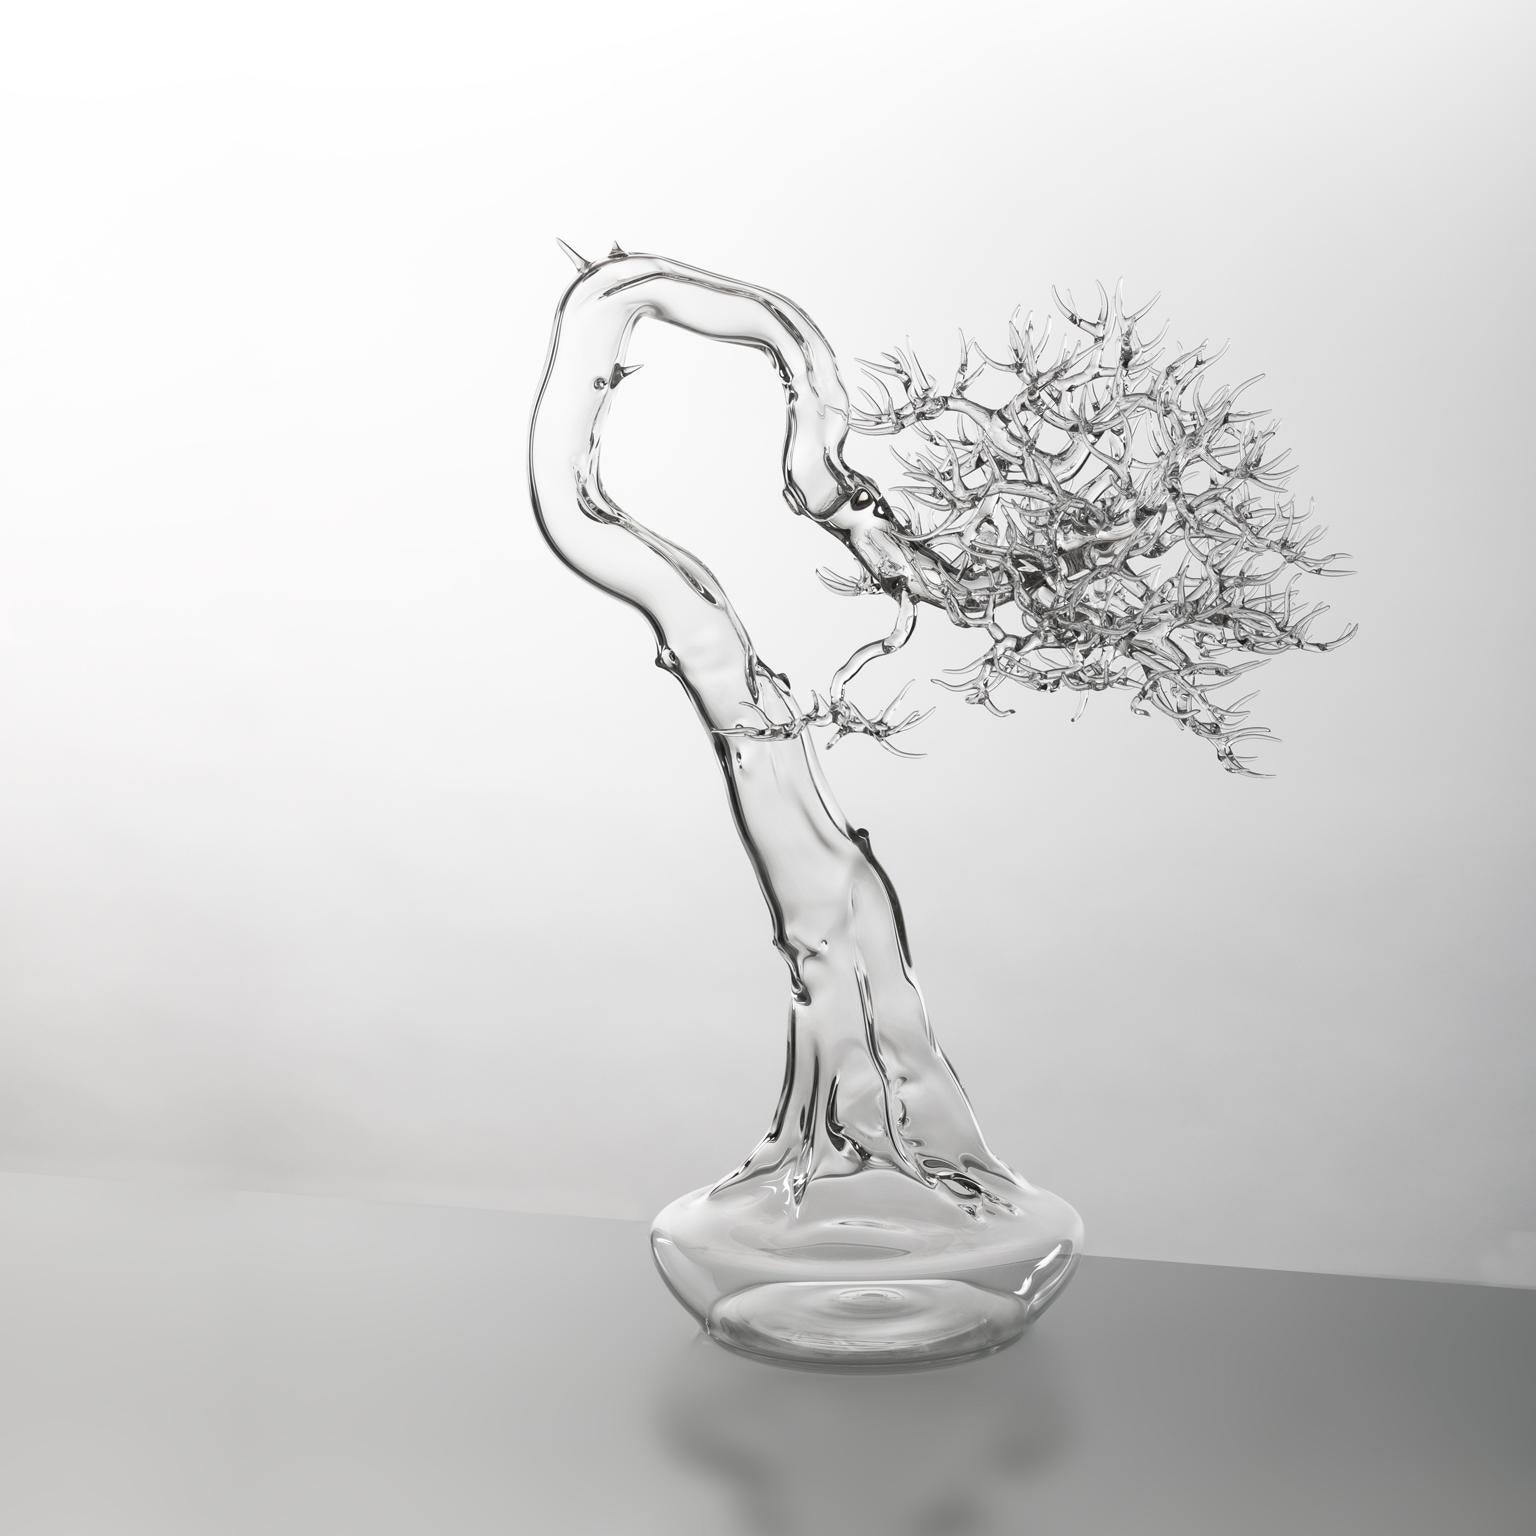 Italian Hand Blown Glass Bonsai Sculpture 2021 #05 by Simone Crestani